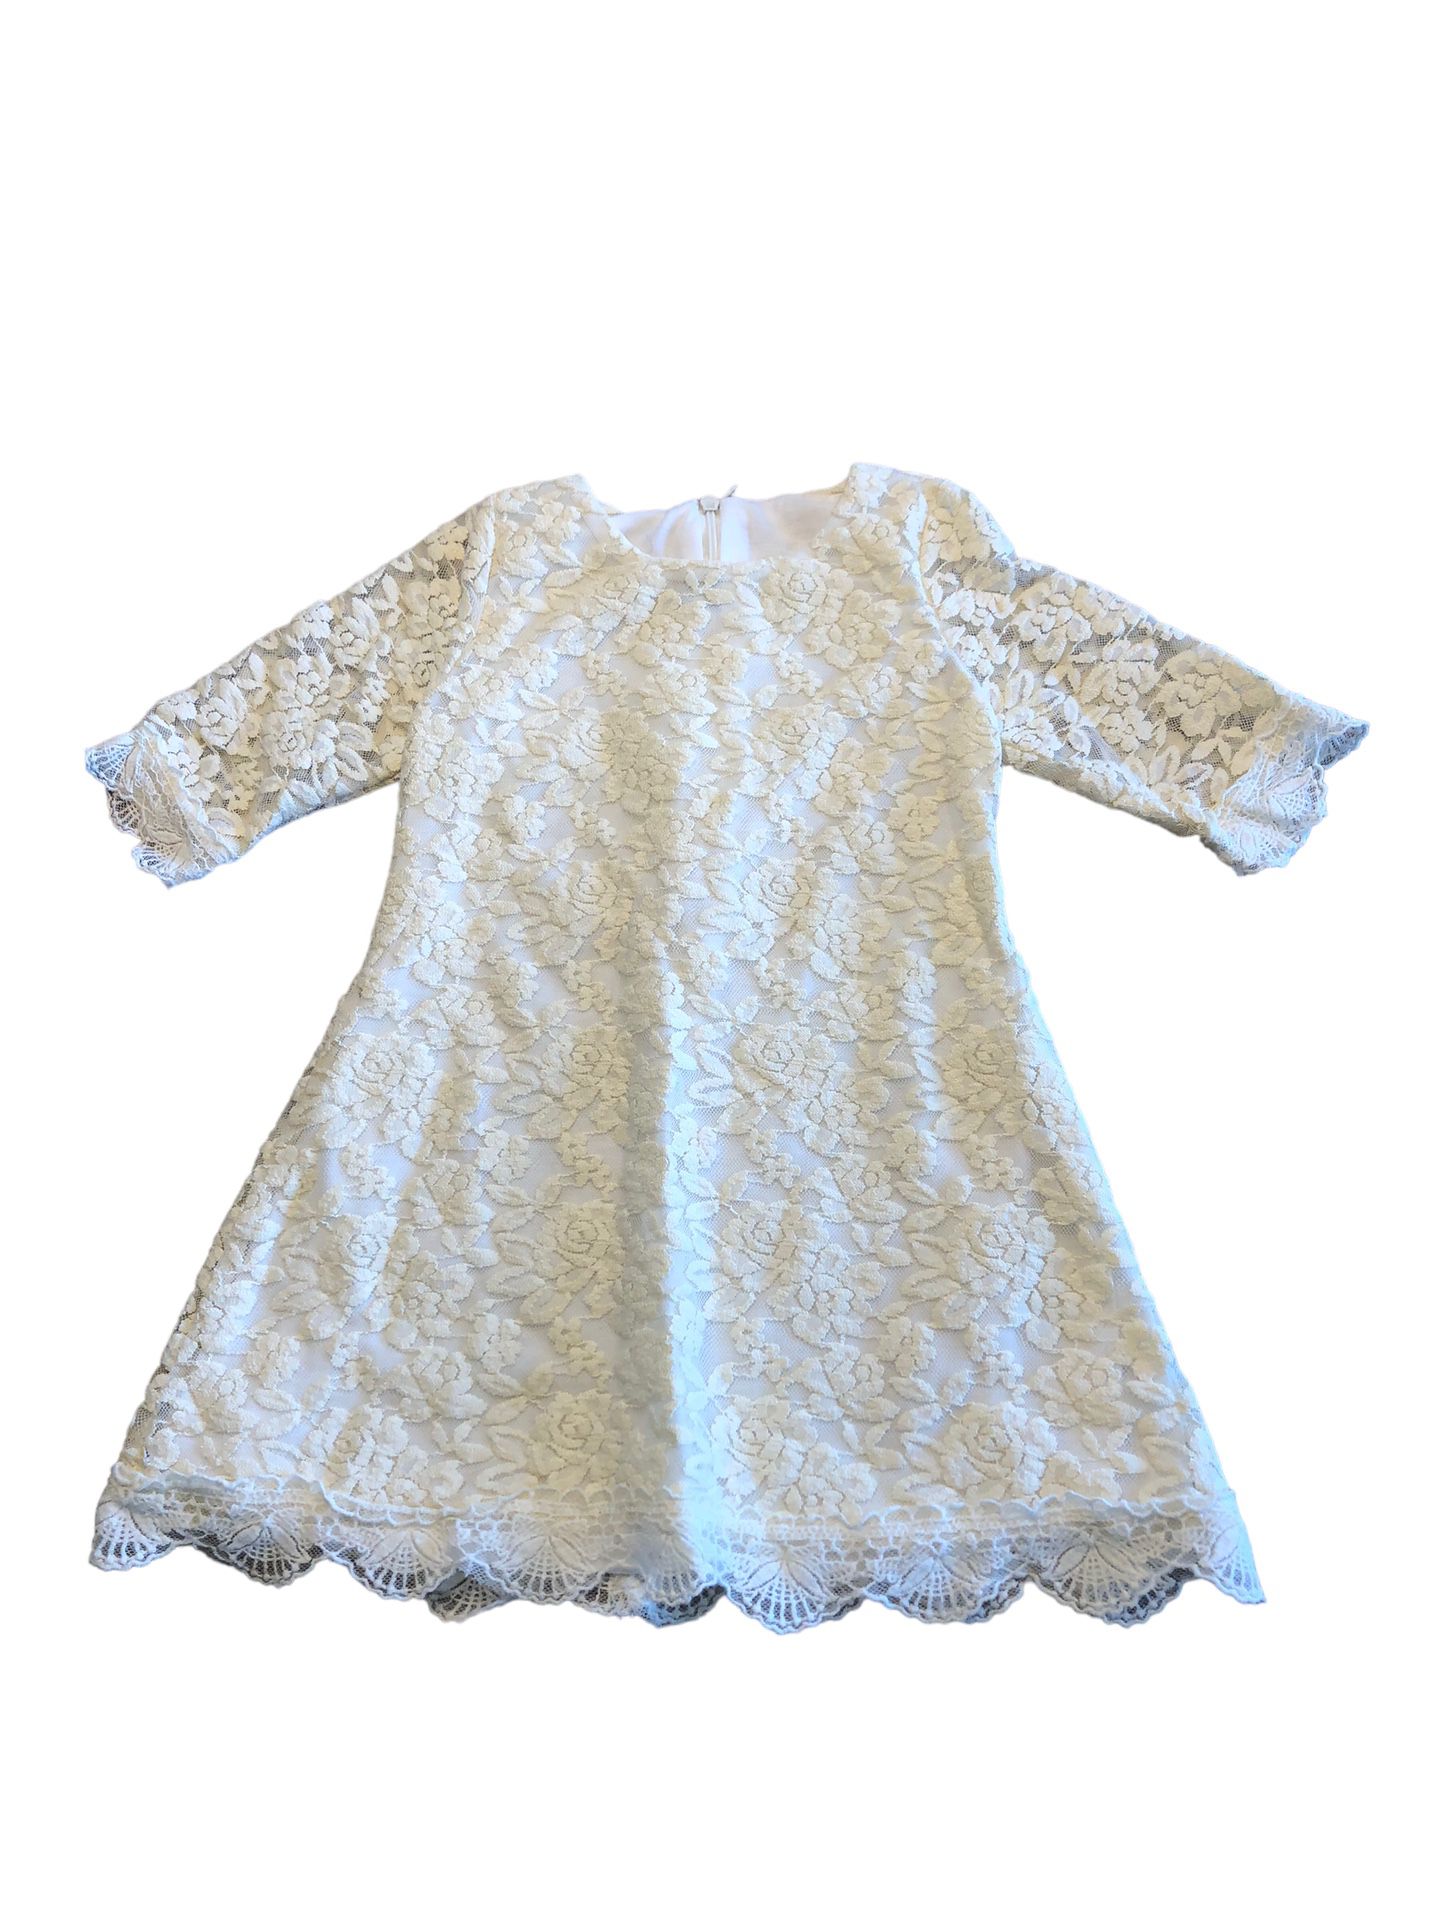 EUC 3T Boutique Cream Lace 3/4 Sleeve Aline Dress